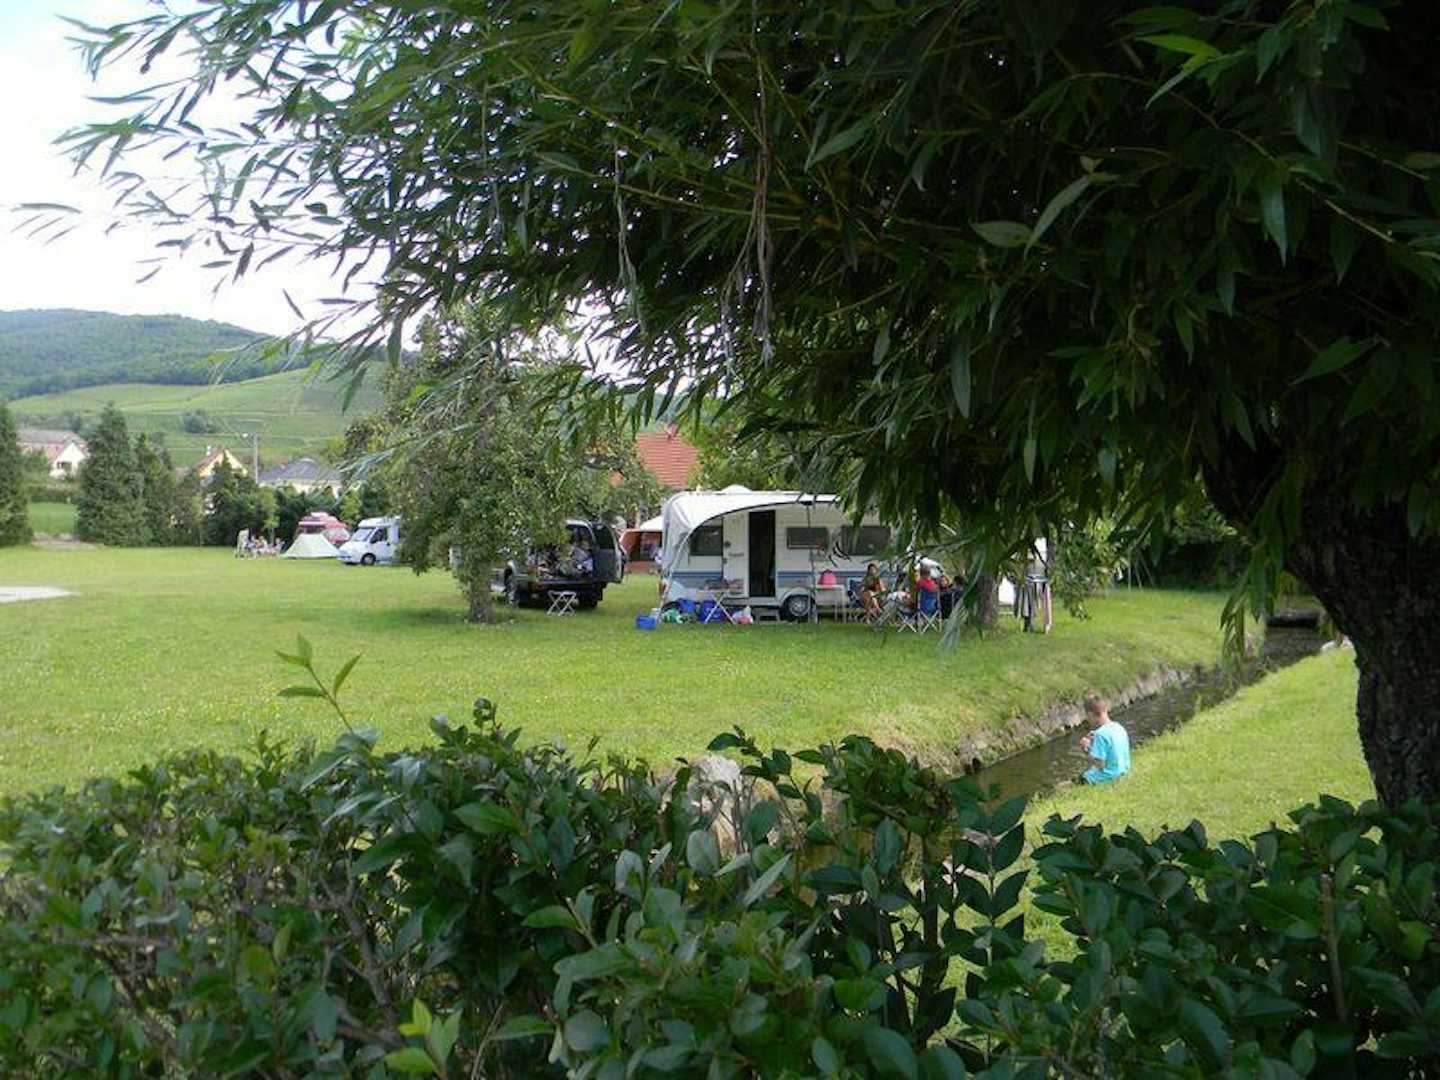 Camping du Moulin